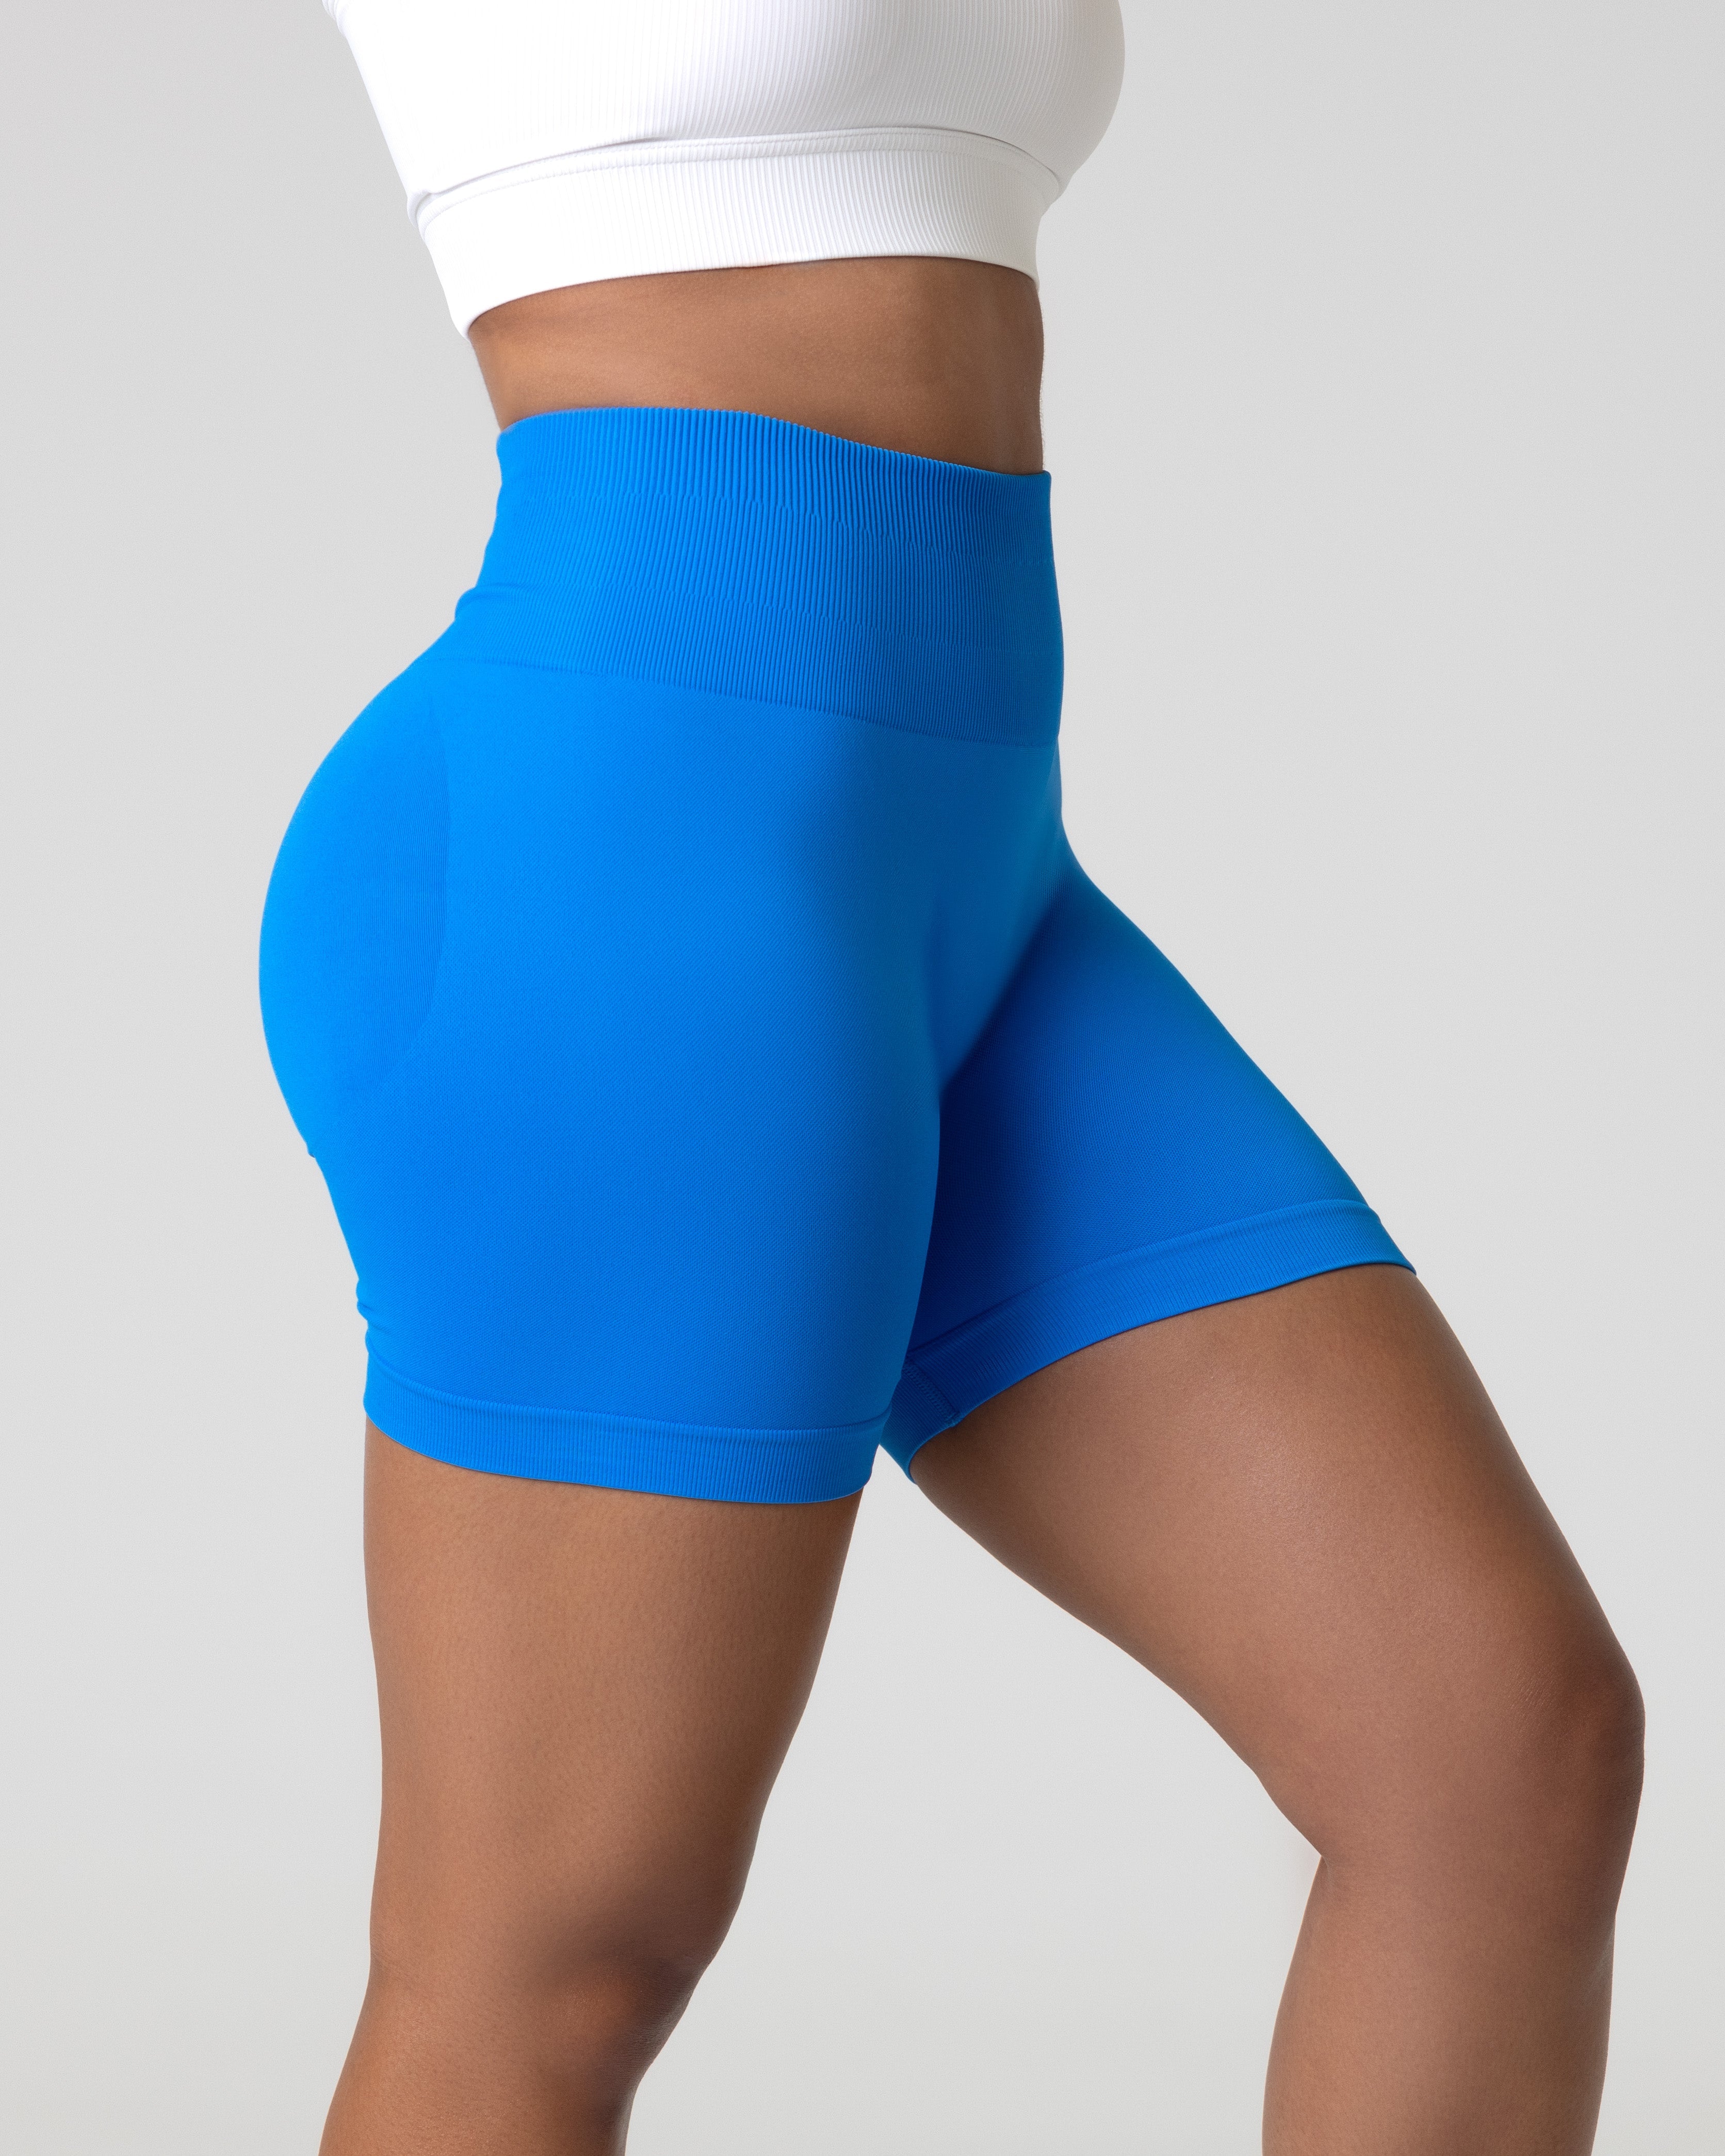 A woman wearing women's scrunch booty shorts